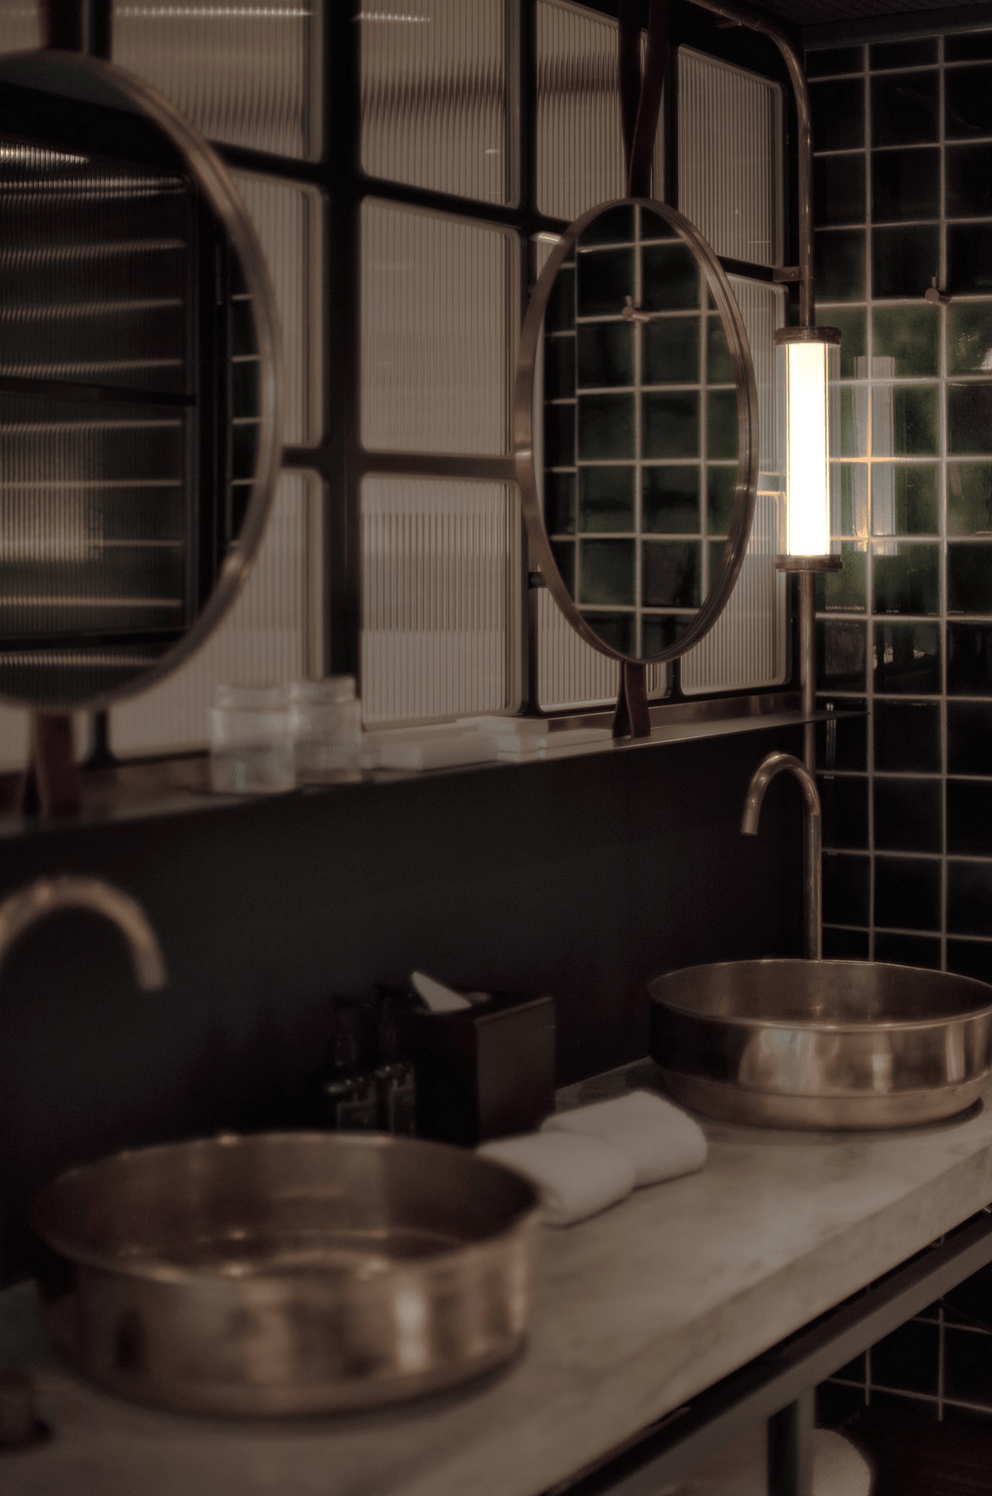 image-restaurant-bathroom-Cleanliness